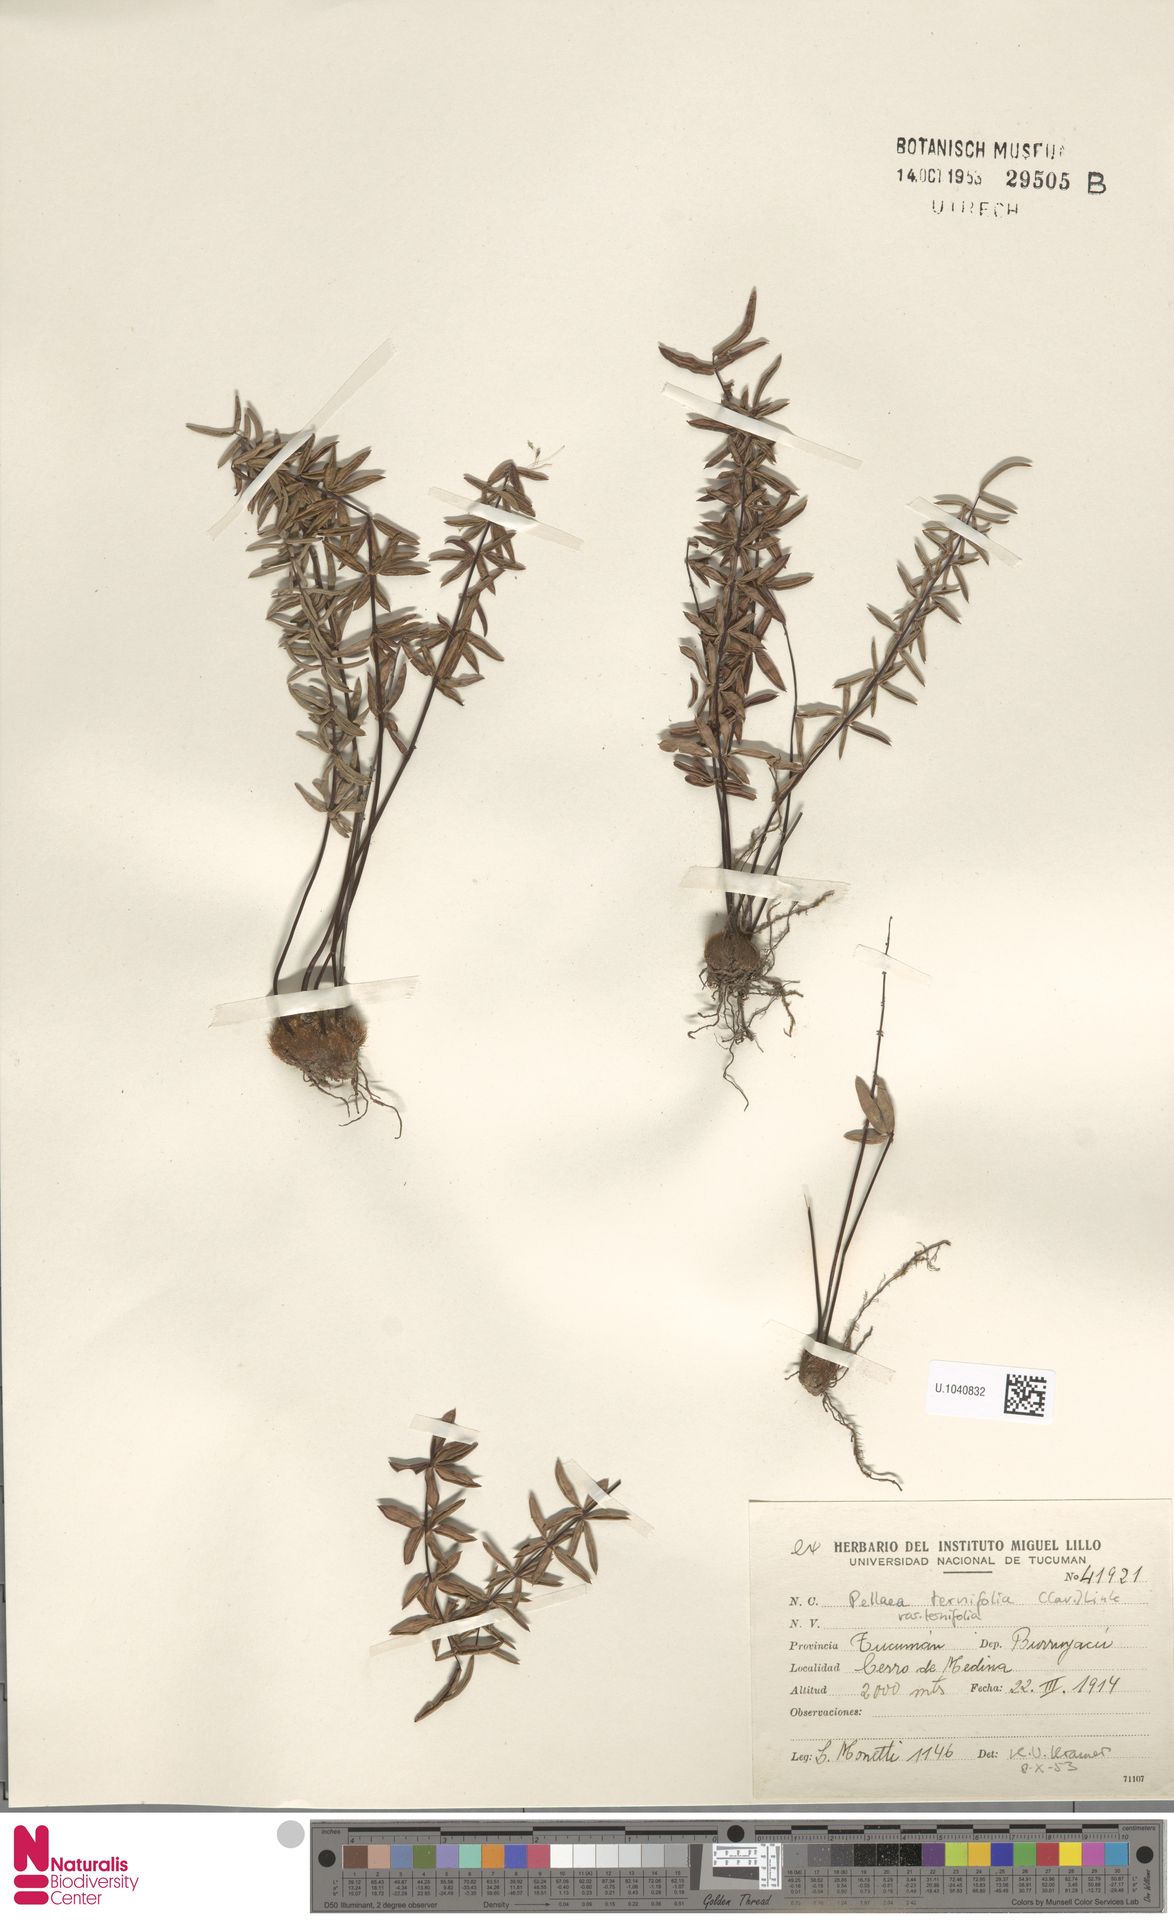 Pellaea ternifolia var. ternifolia image